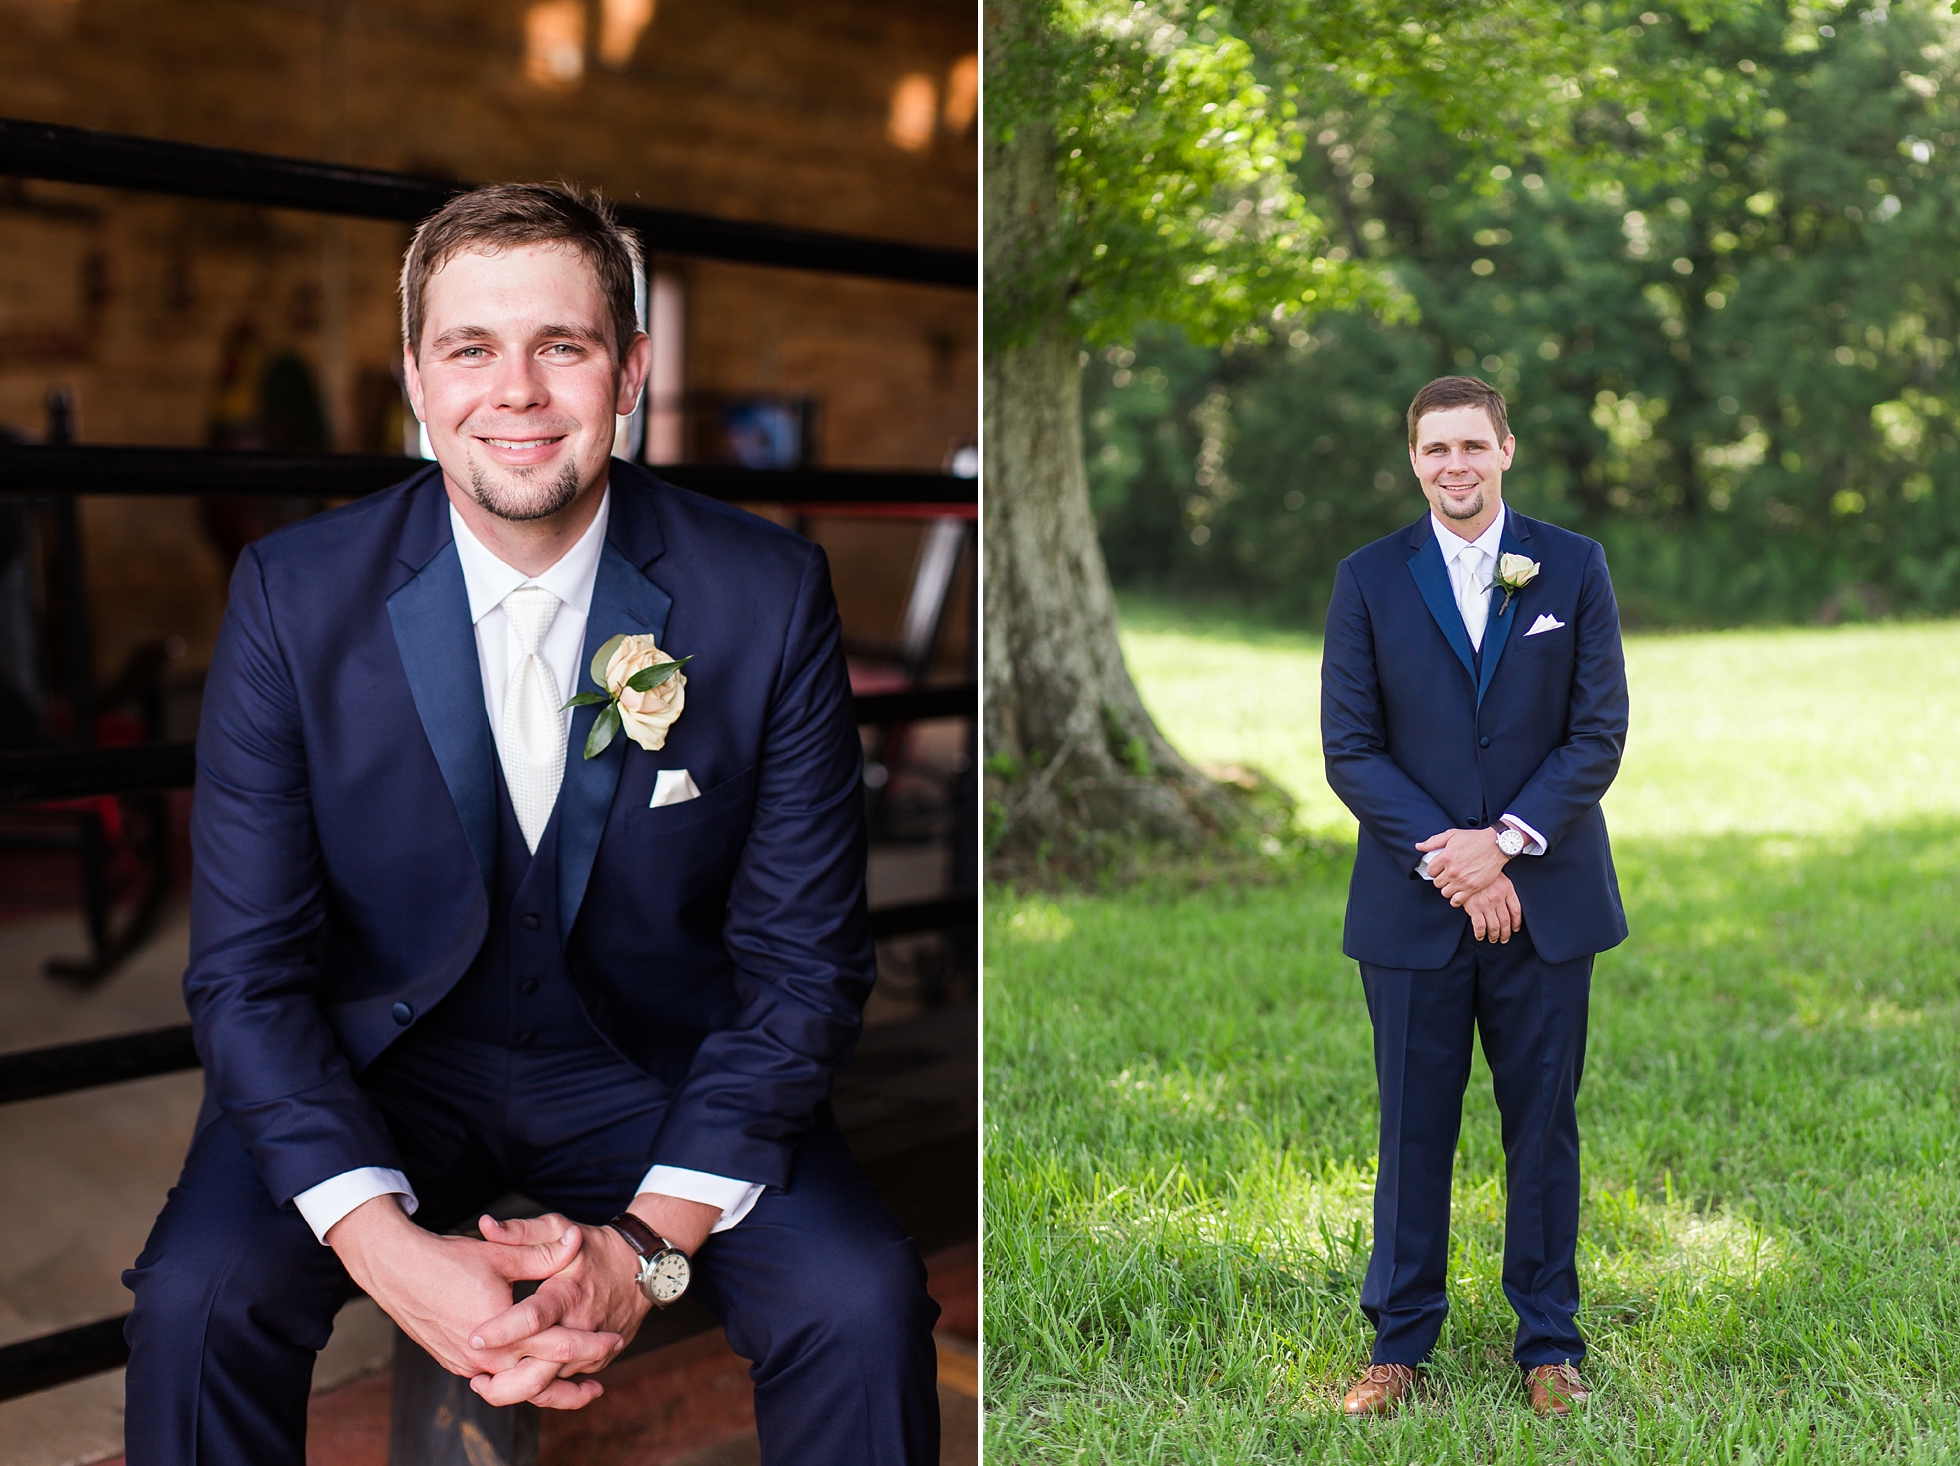 blue suit wedding groom tux